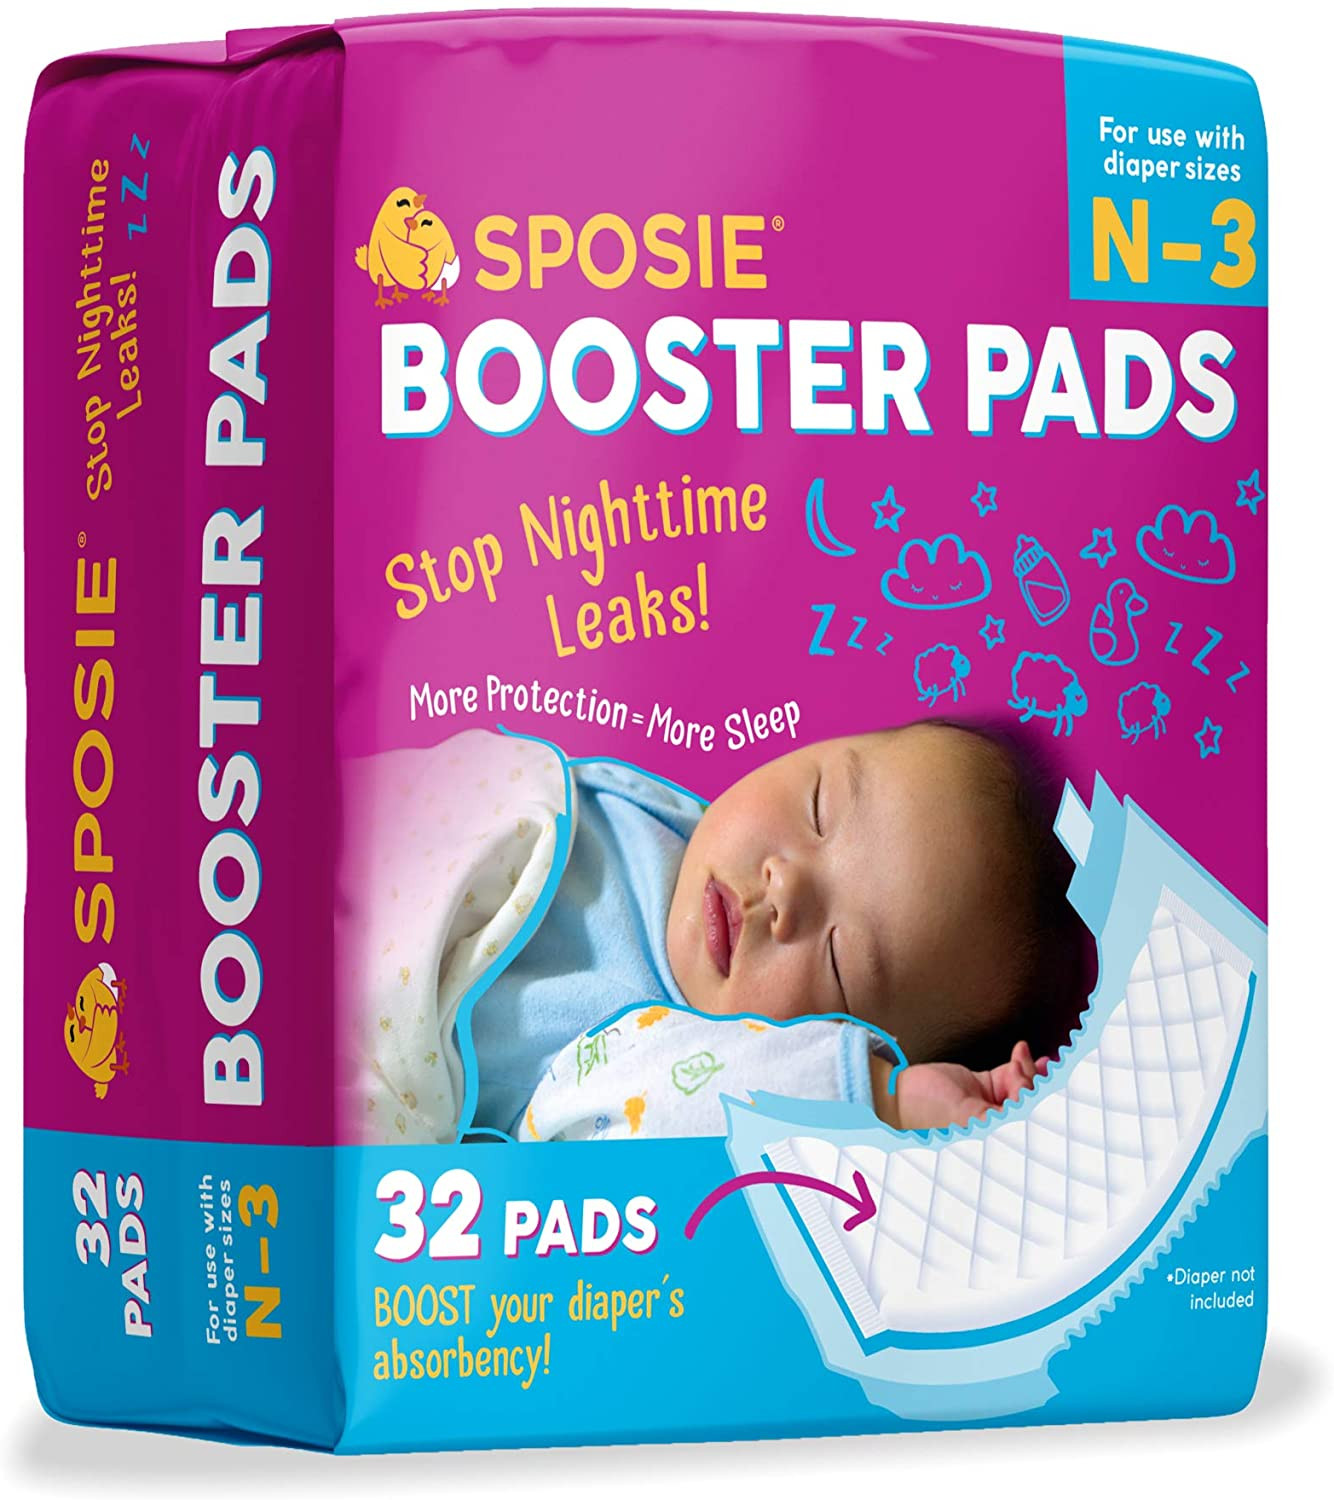 Sposie Booster Pads - Stop nighttime leaks!